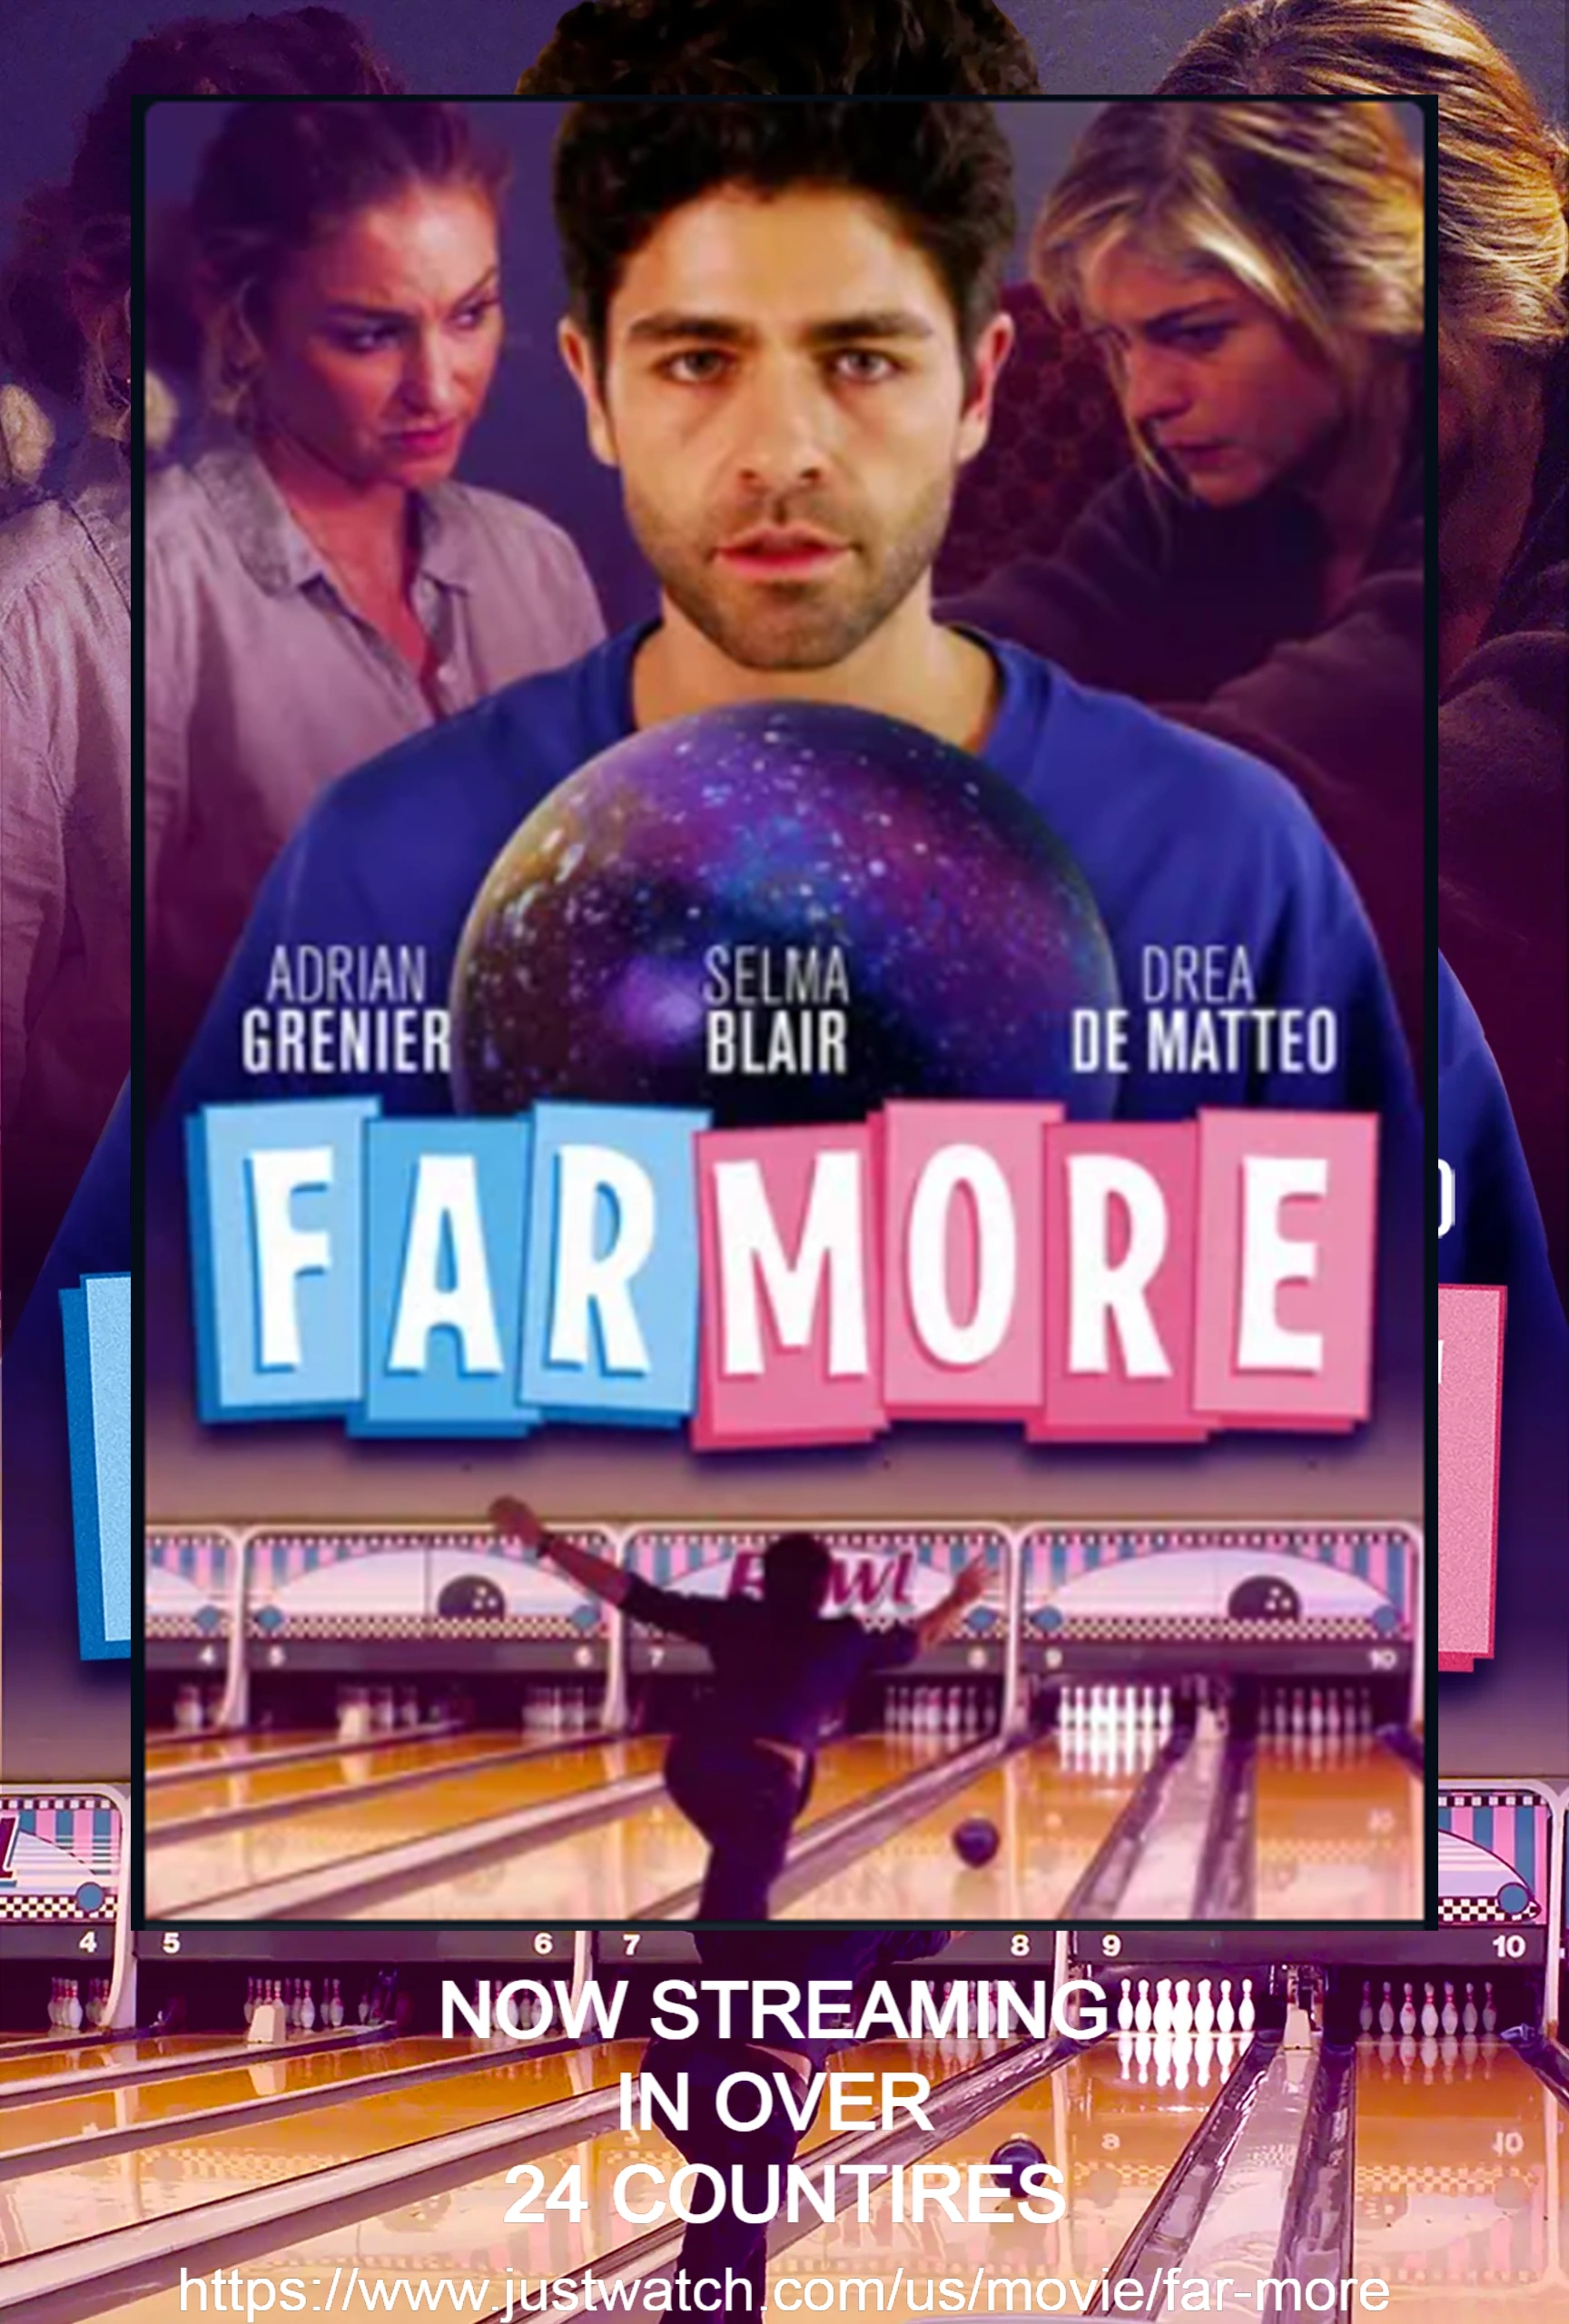 #FARMORE starring Adrian Grenier, Selma Blair, Drea de Matteo